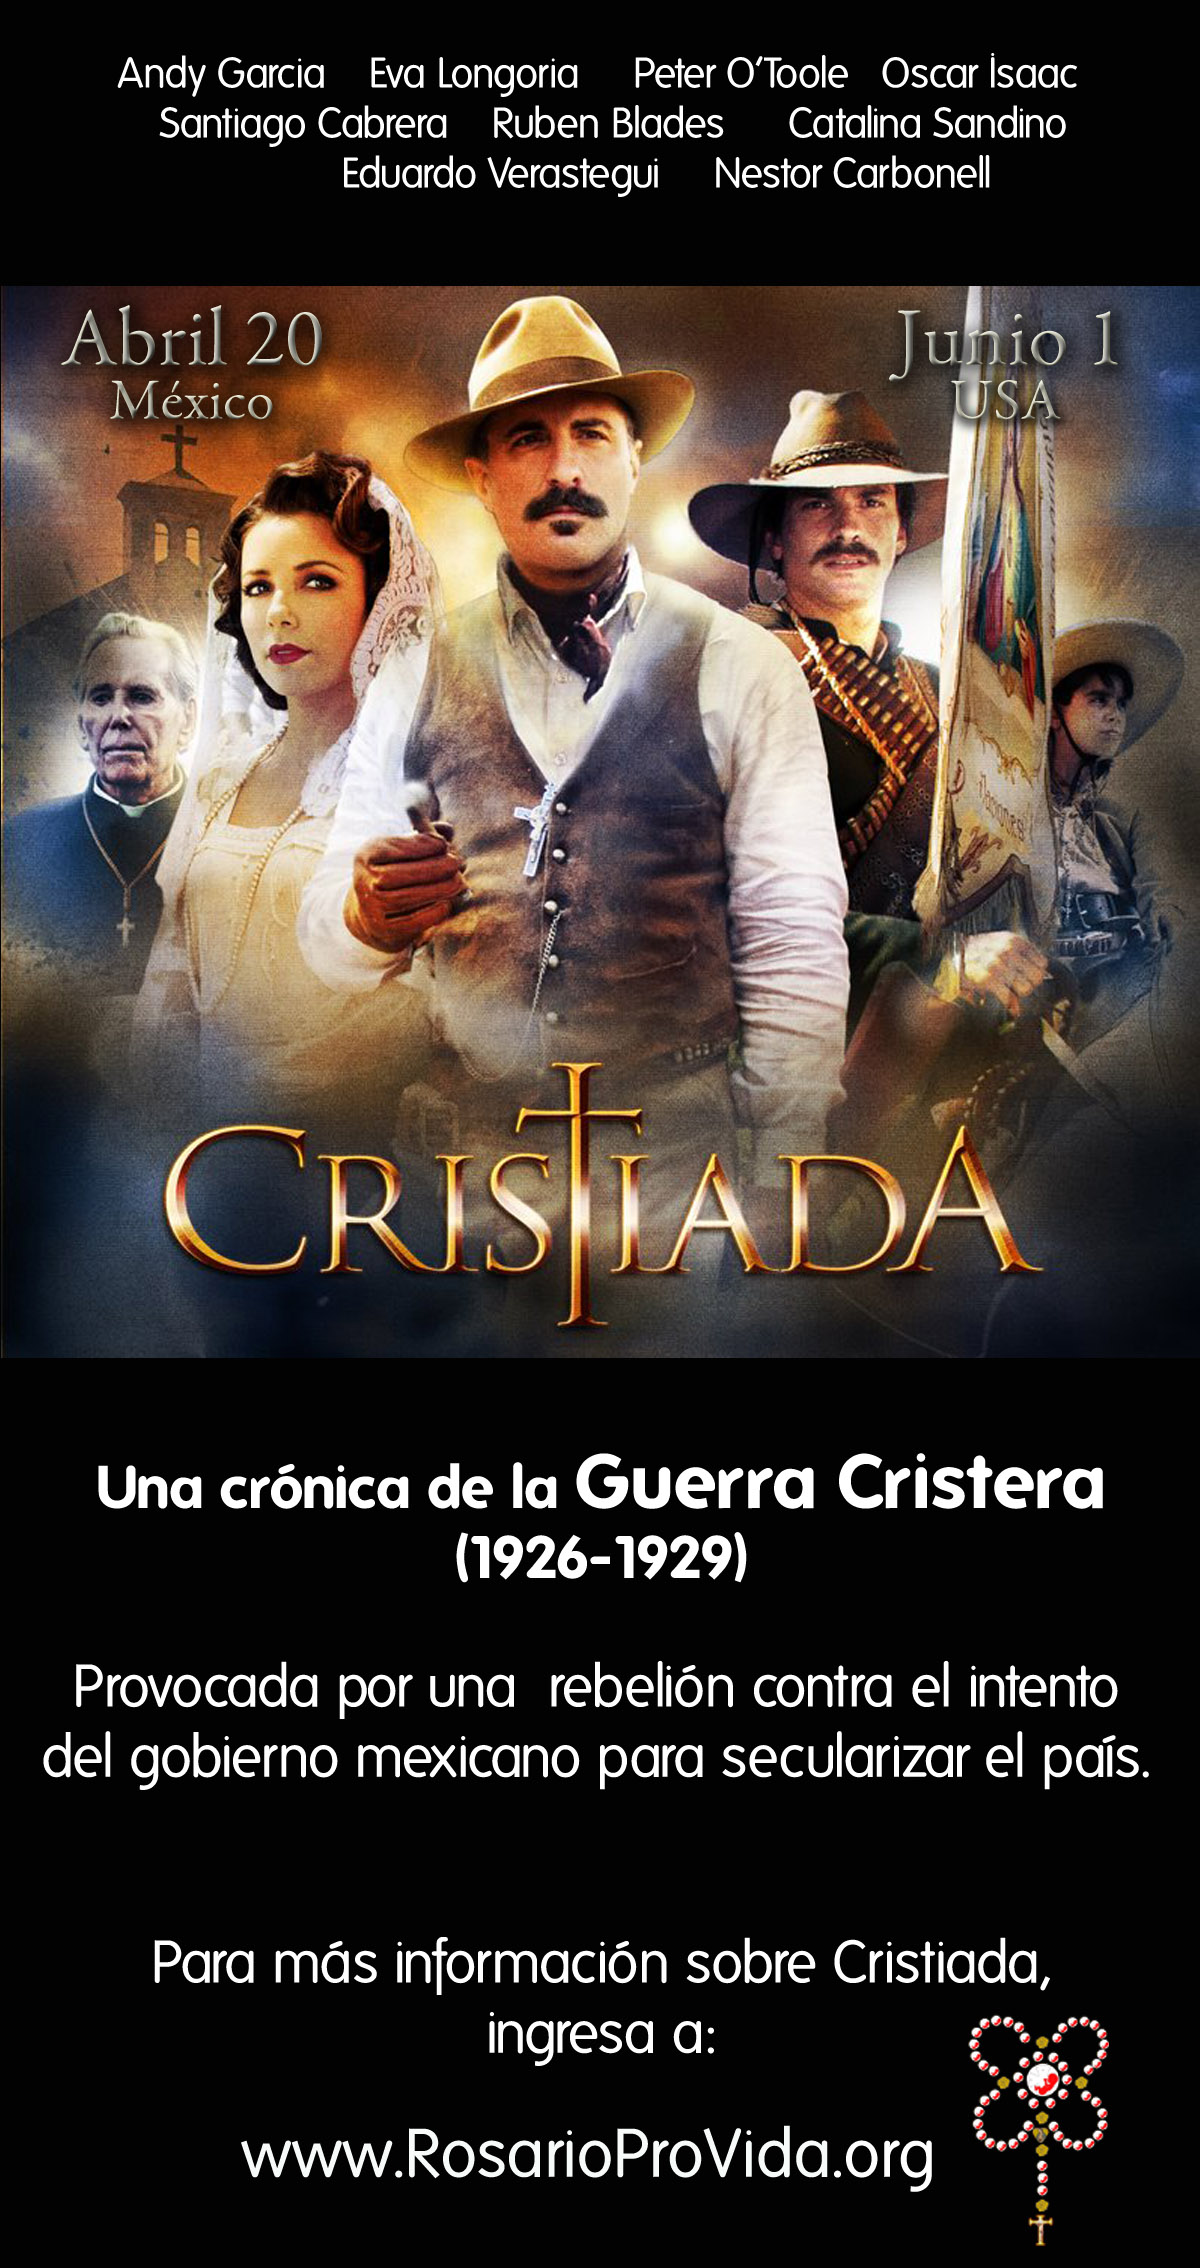 Cristiada (For Greater Glory) (2012) [Bluray Screener][Spanish]